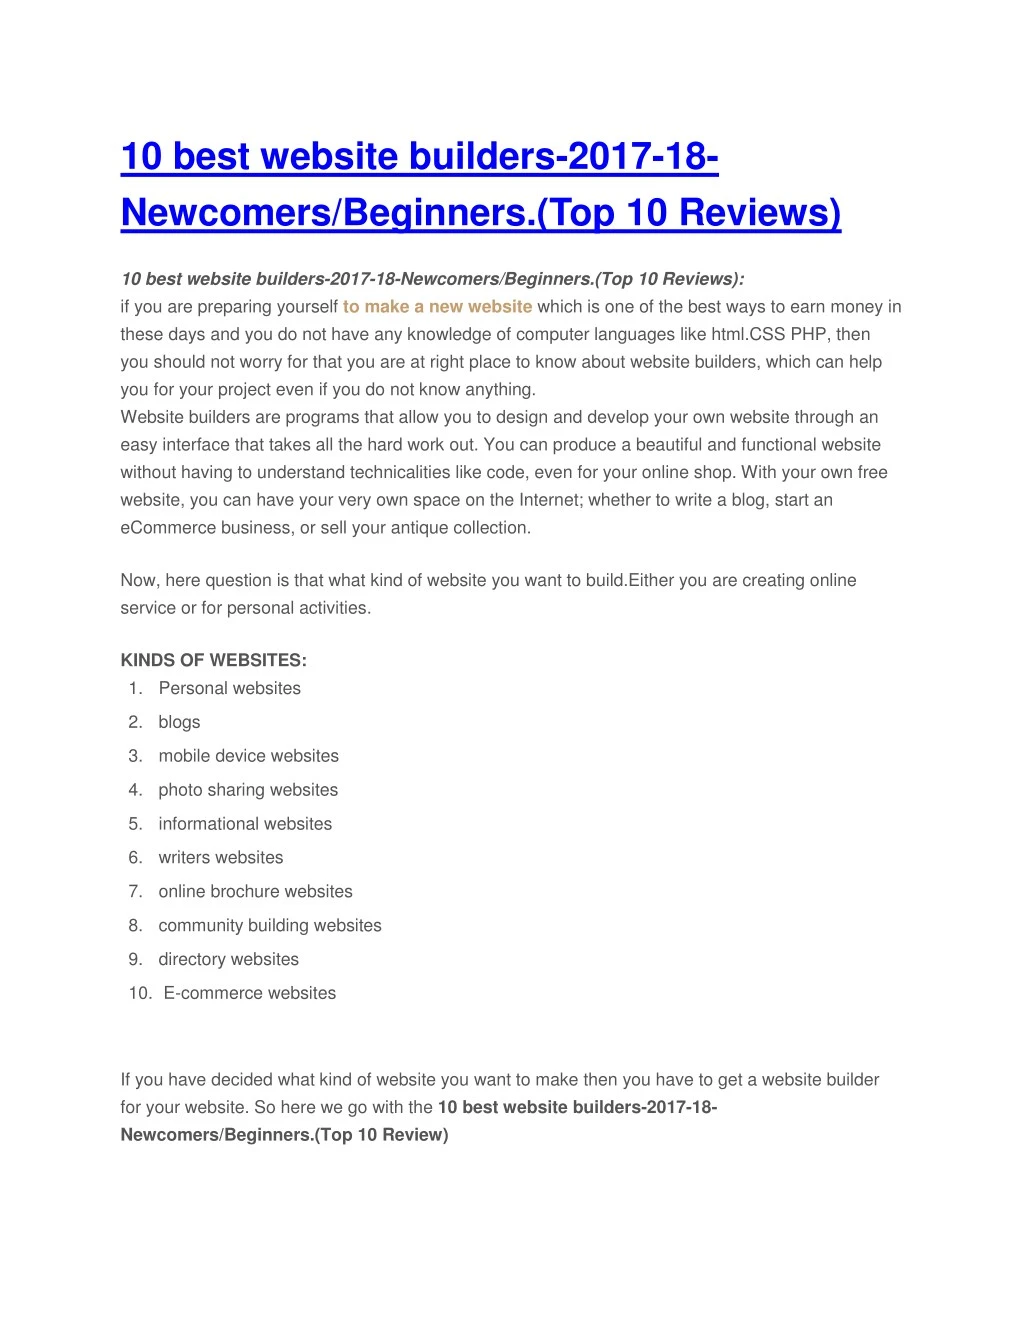 10 best website builders 2017 18 newcomers